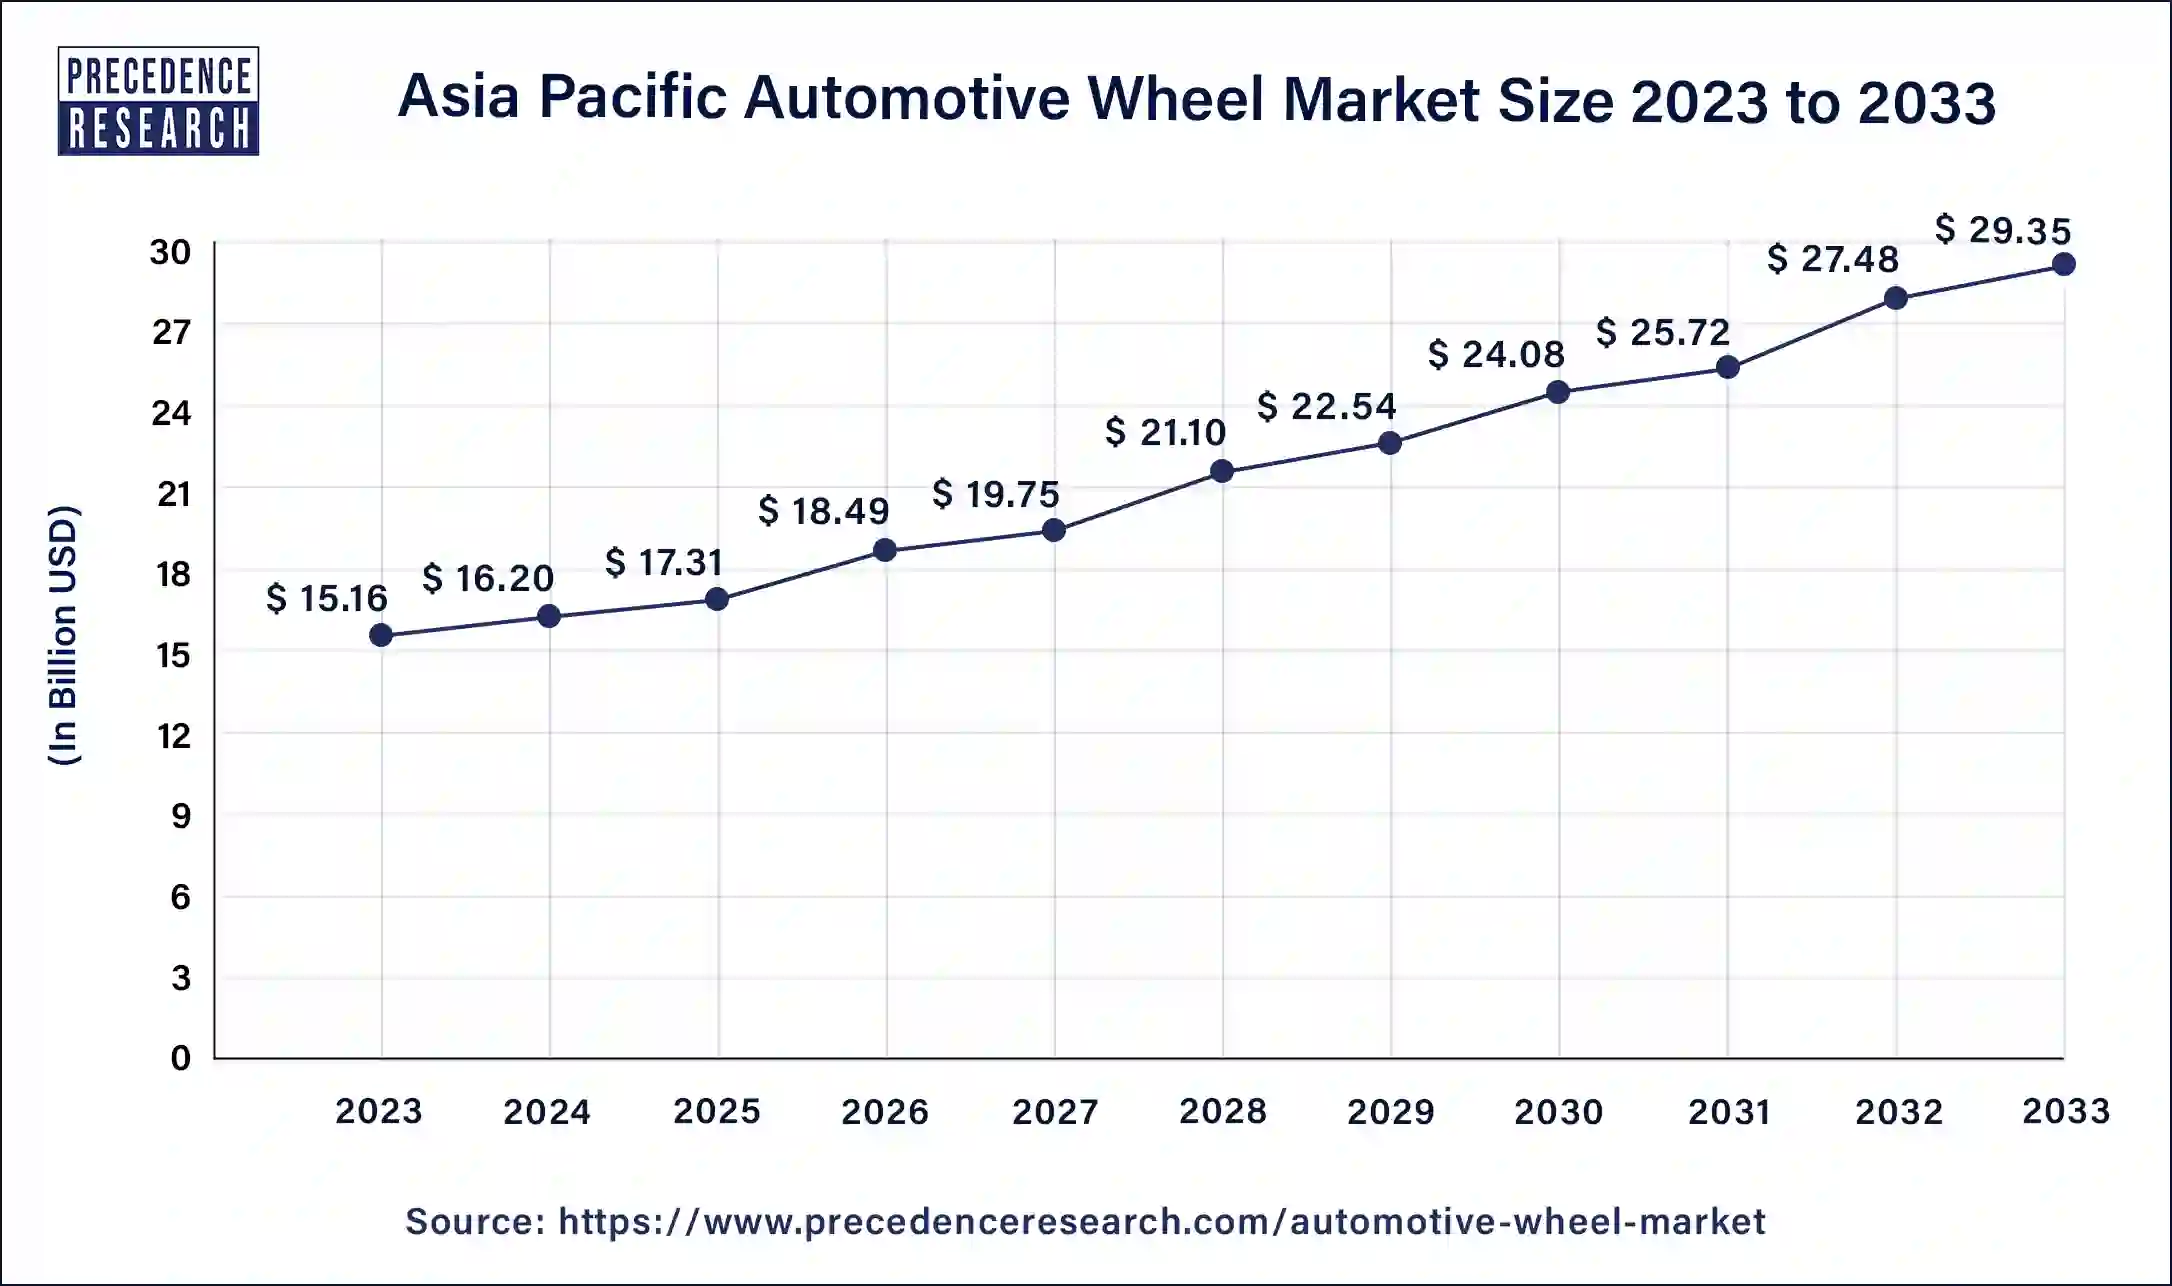 Asia Pacific Automotive Wheel Market Size 2024 to 2033